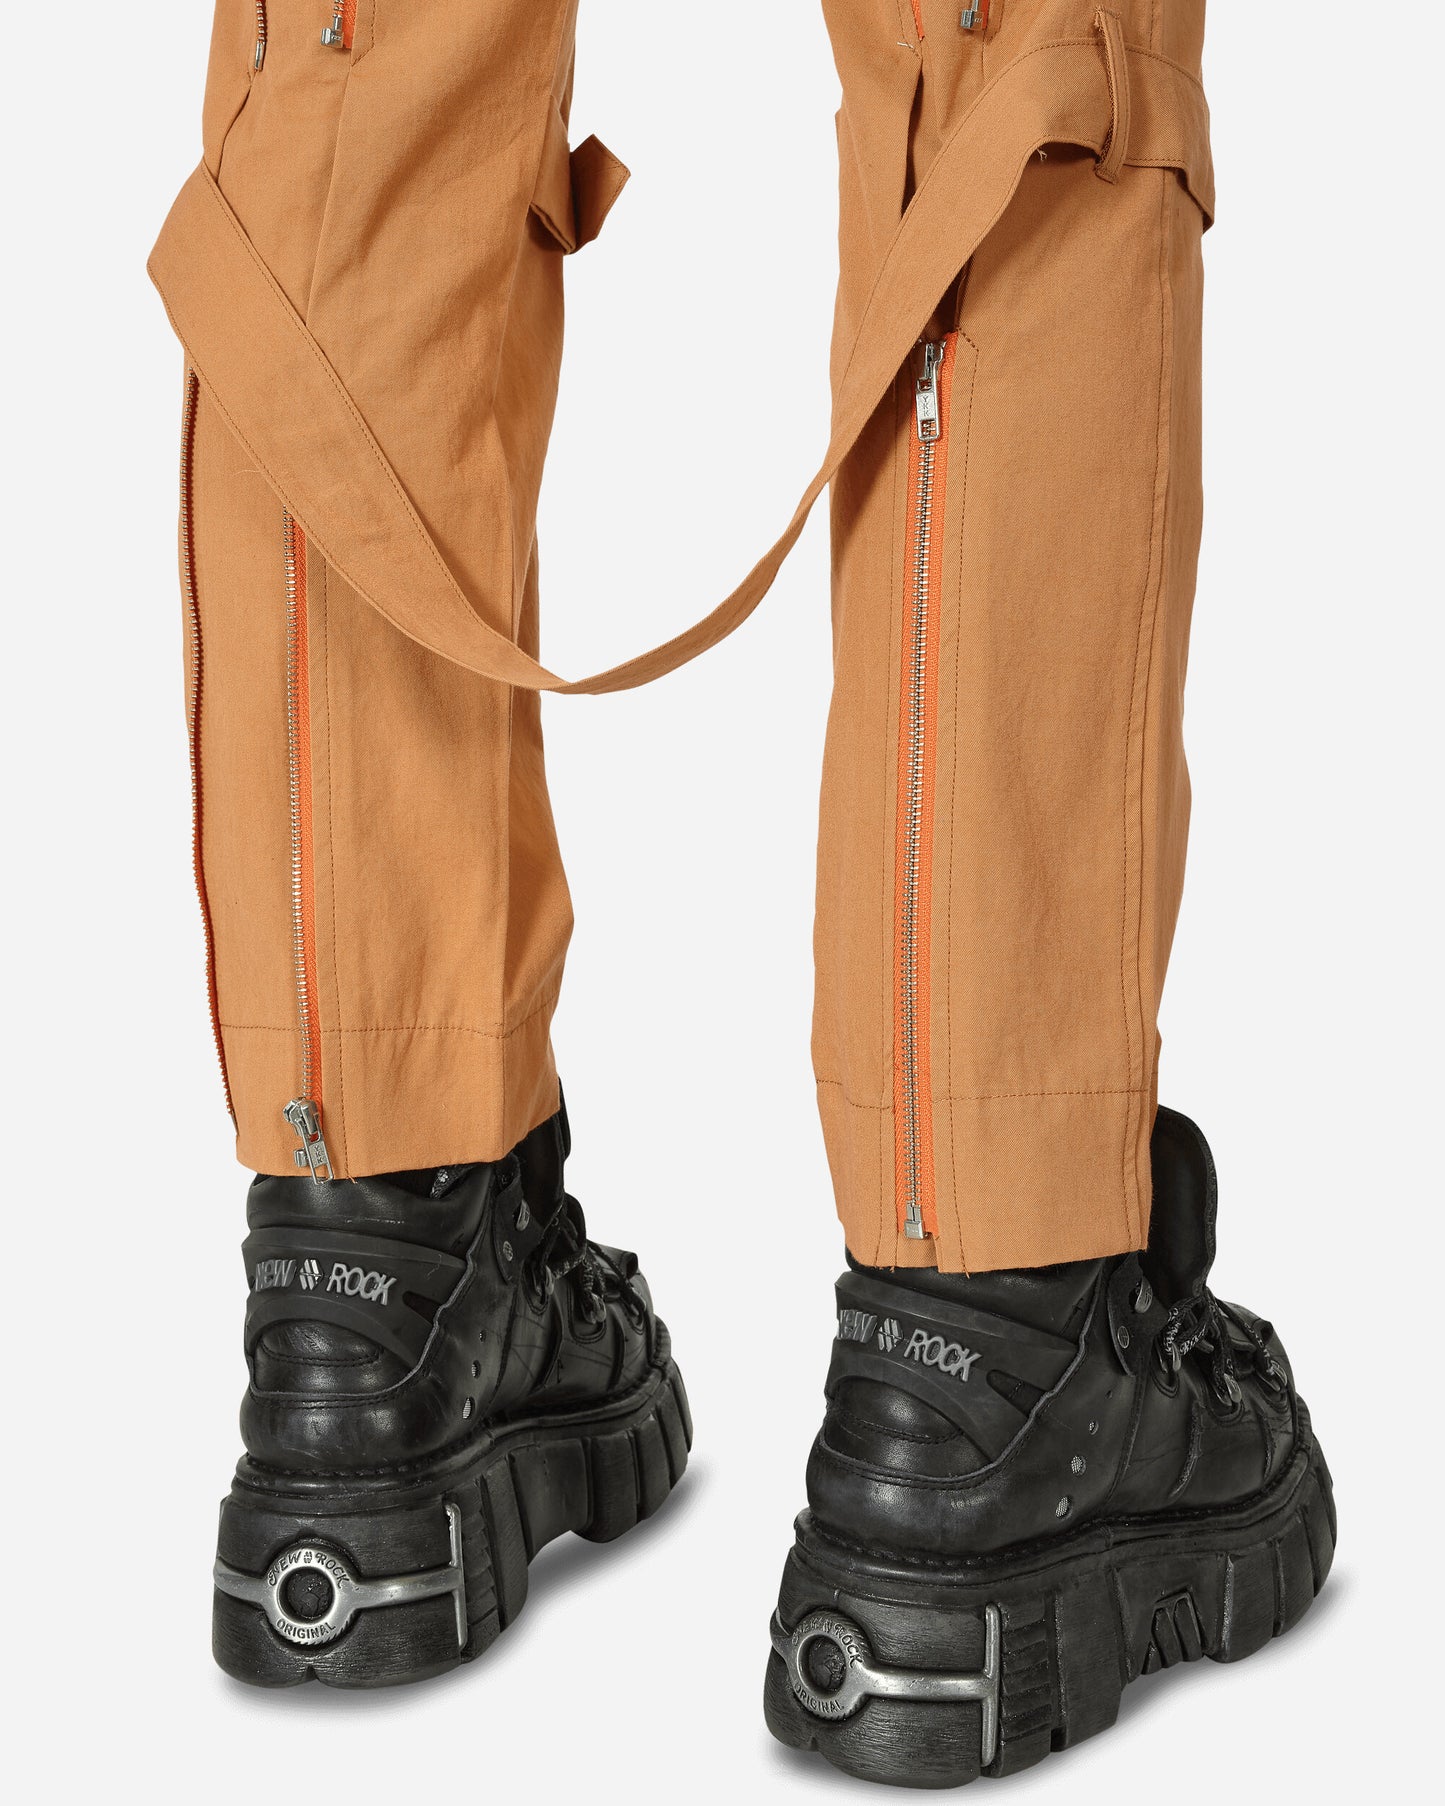 Phingerin Bontage Pants Orange Pants Trousers PD-231-BT-031 B